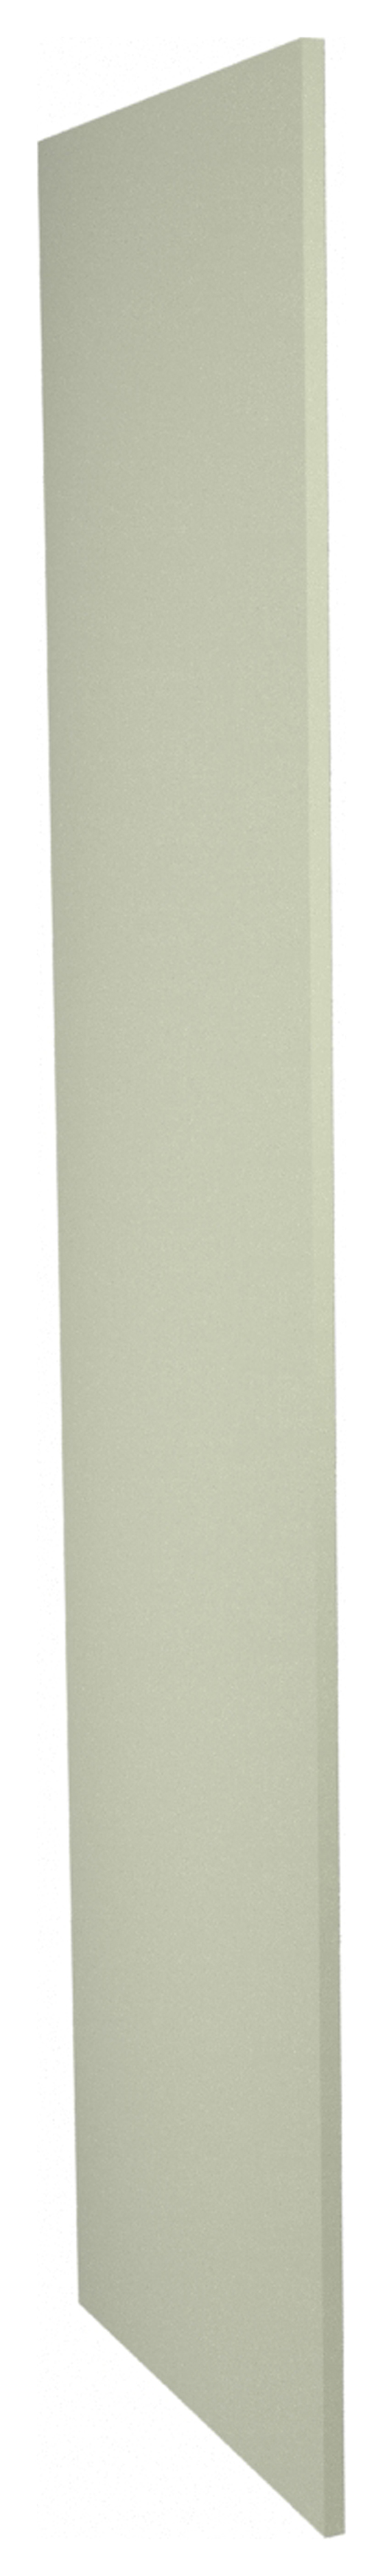 Wickes Ohio Sage Shaker Decor Tall Panel - 18mm